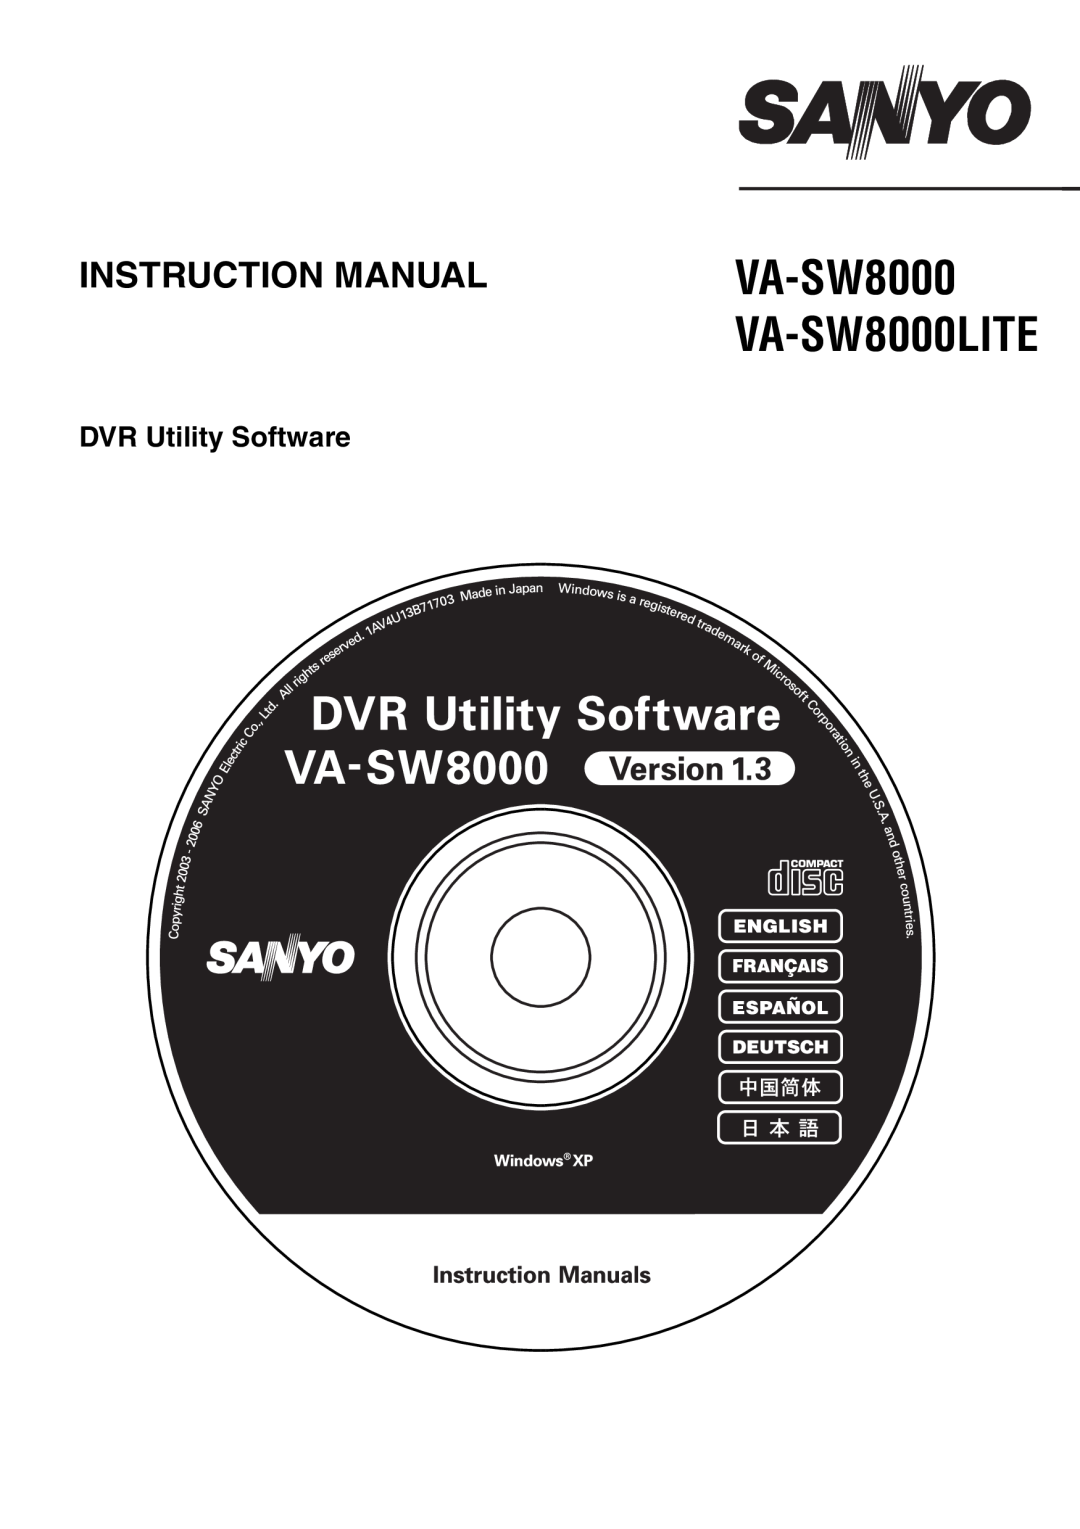 Sanyo instruction manual VA-SW8000 VA-SW8000LITE, DVR Utility Software 